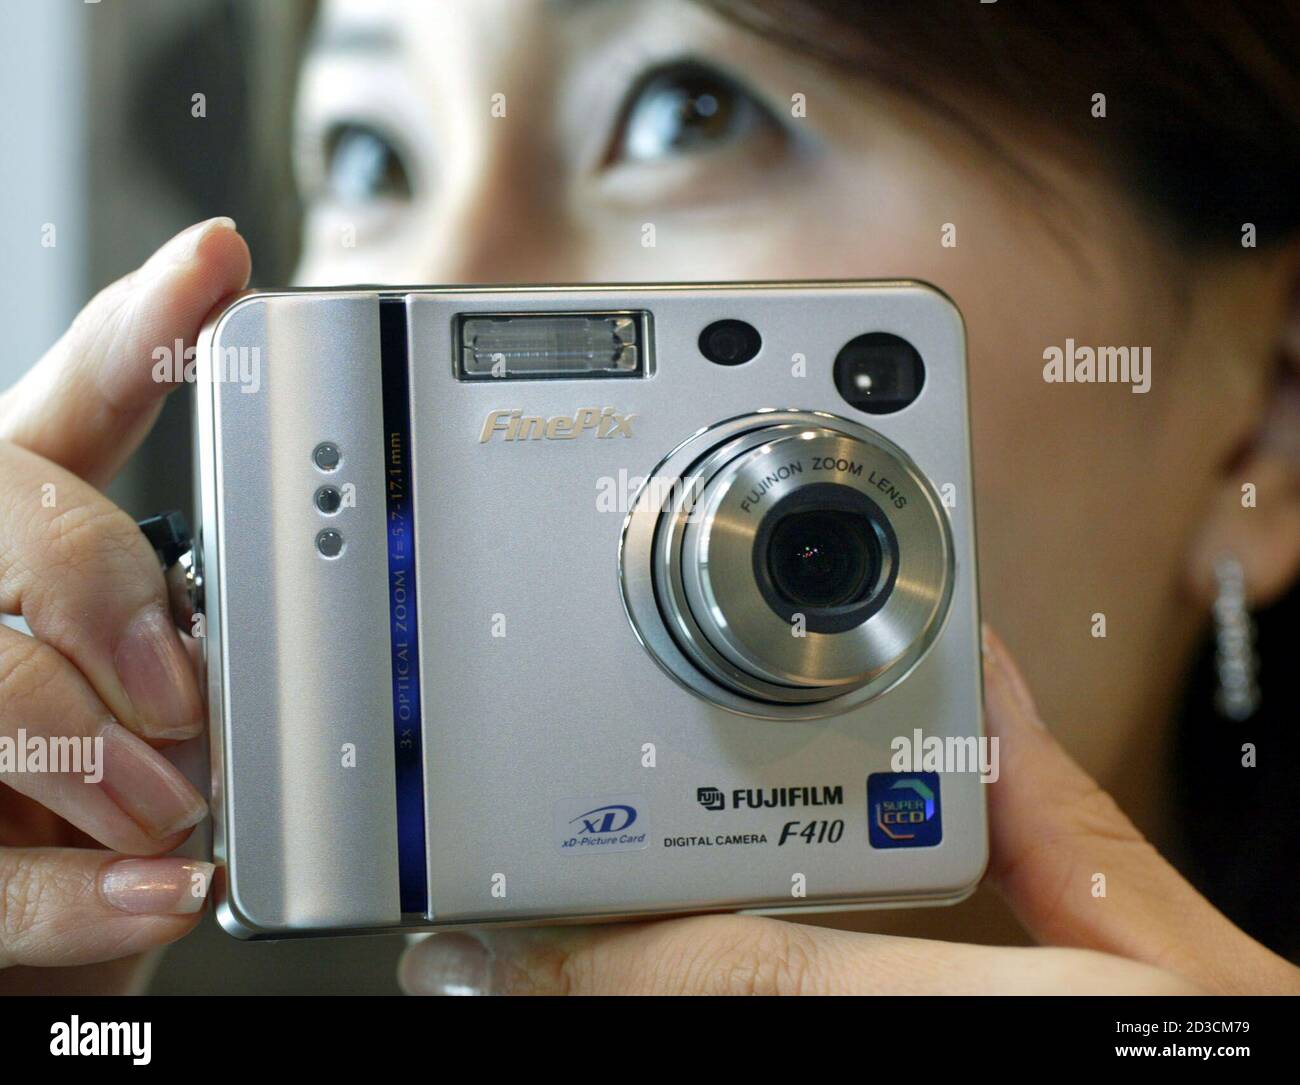 Fuji finepix digital camera hi-res stock photography and images - Alamy